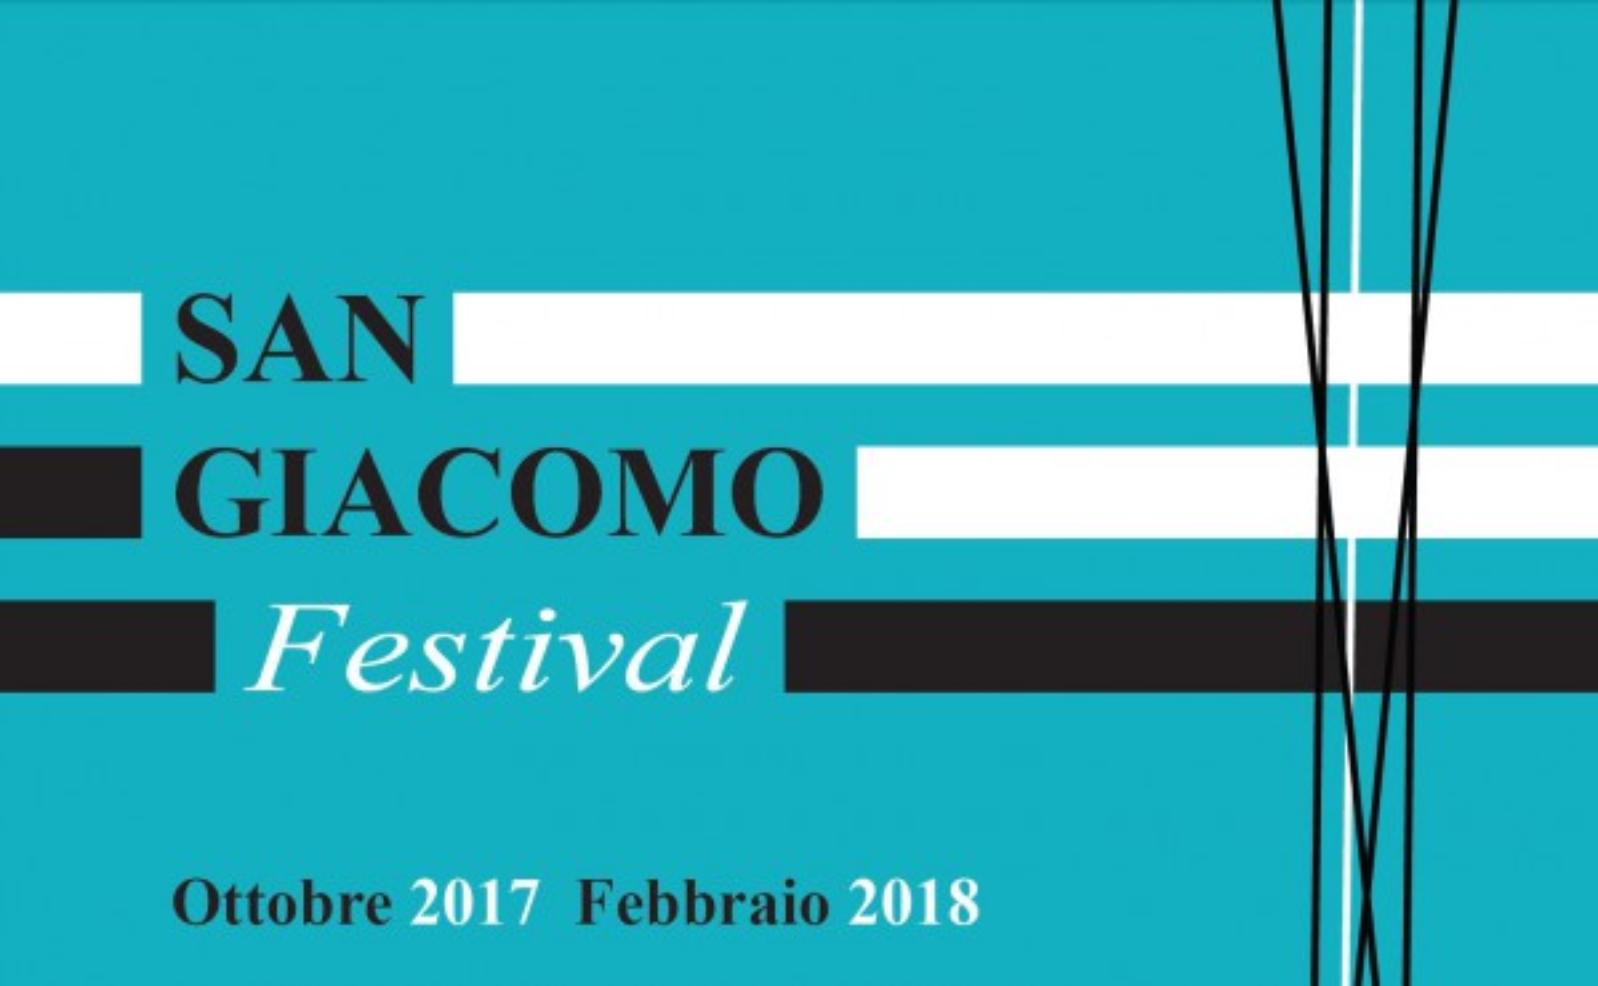 San Giacomo Festival - January 2018